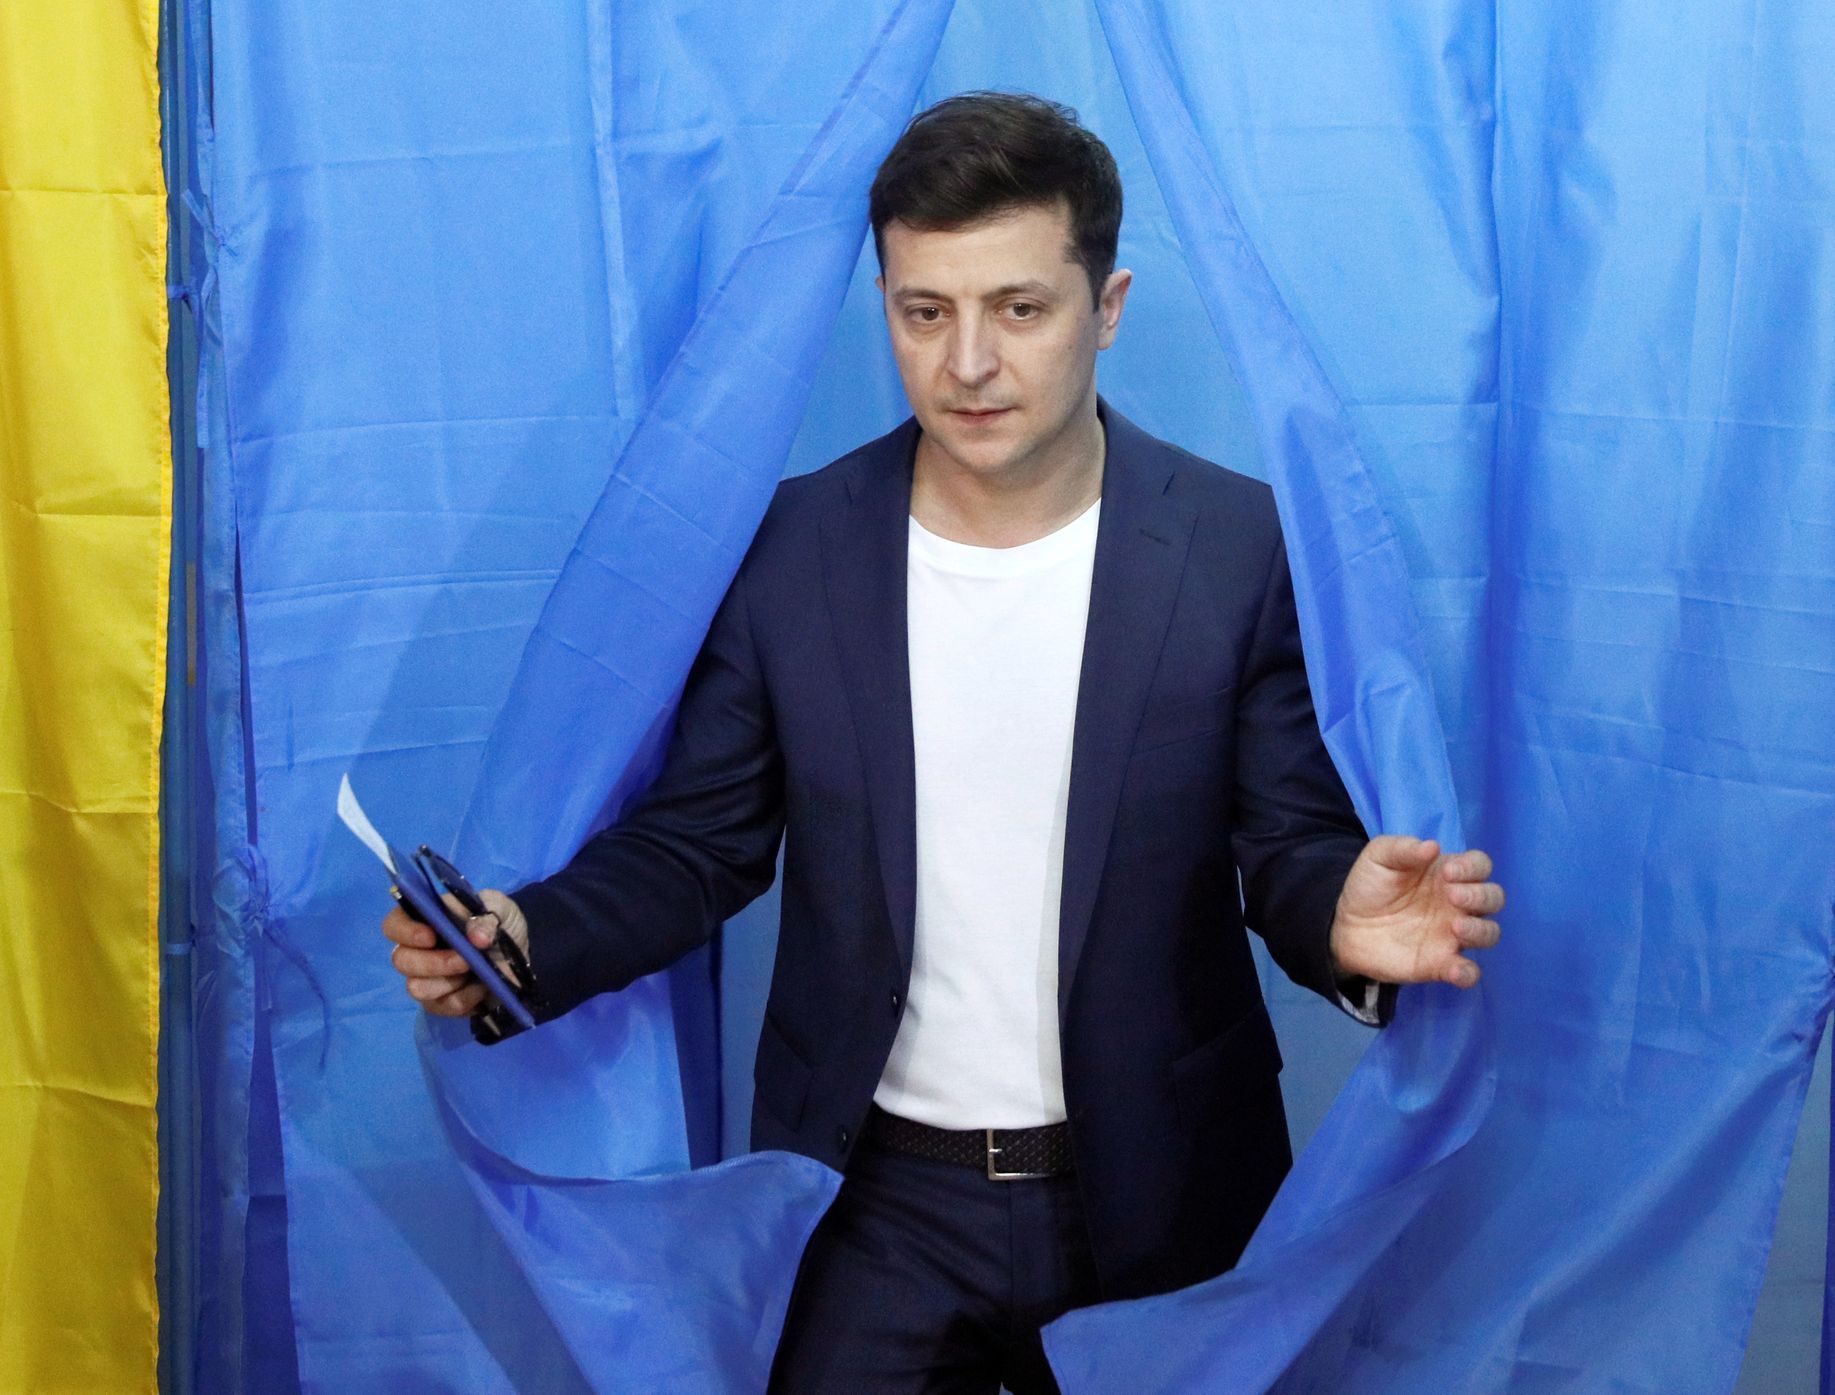 Ukrajina volby Zelenskyj